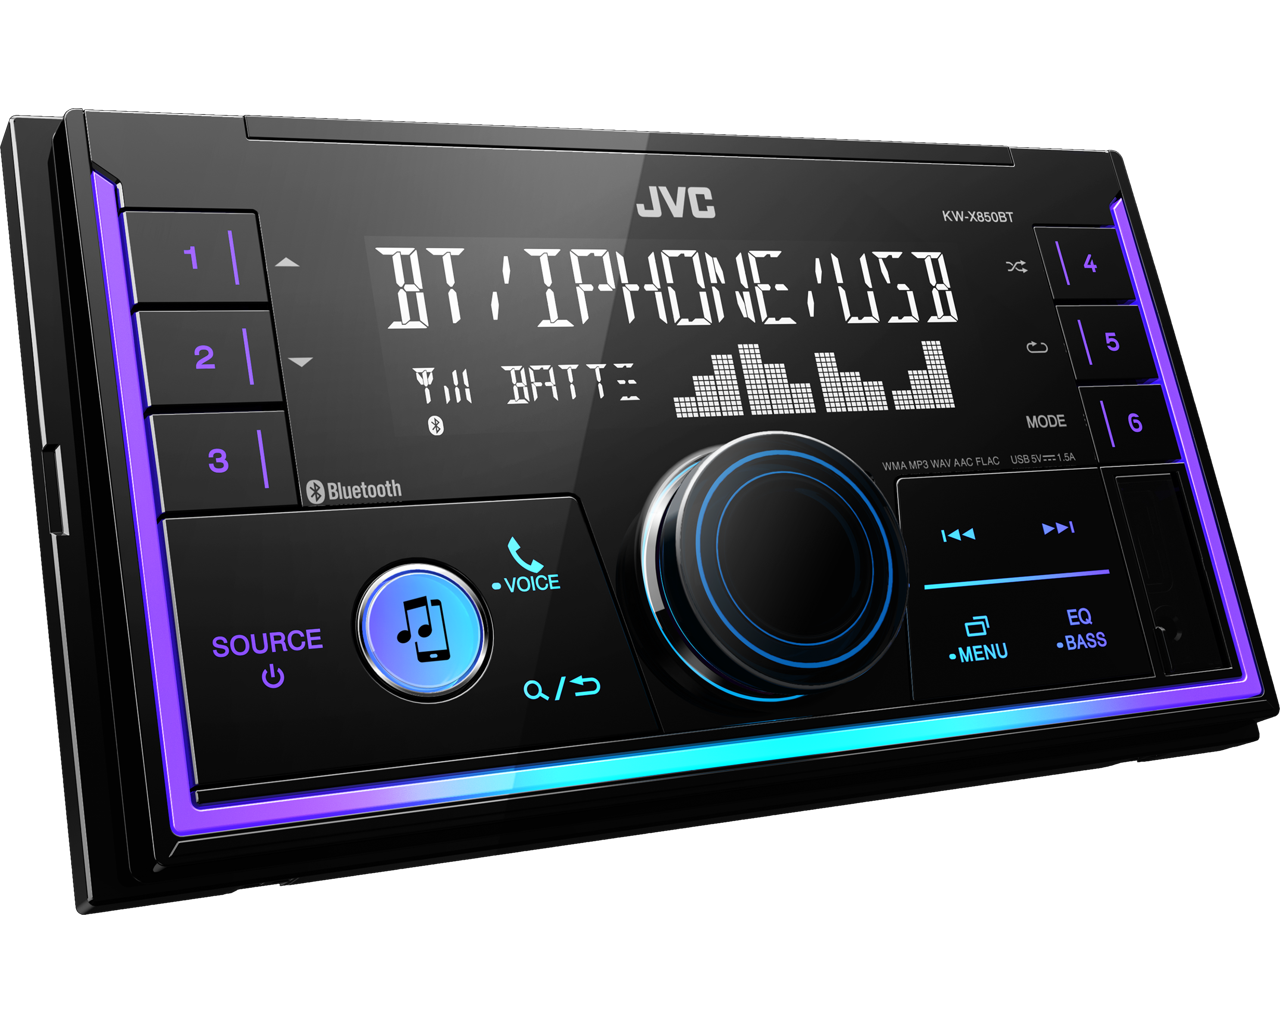 JVC KW-X850BT 2 DIN méretű Bluetooth autórádió